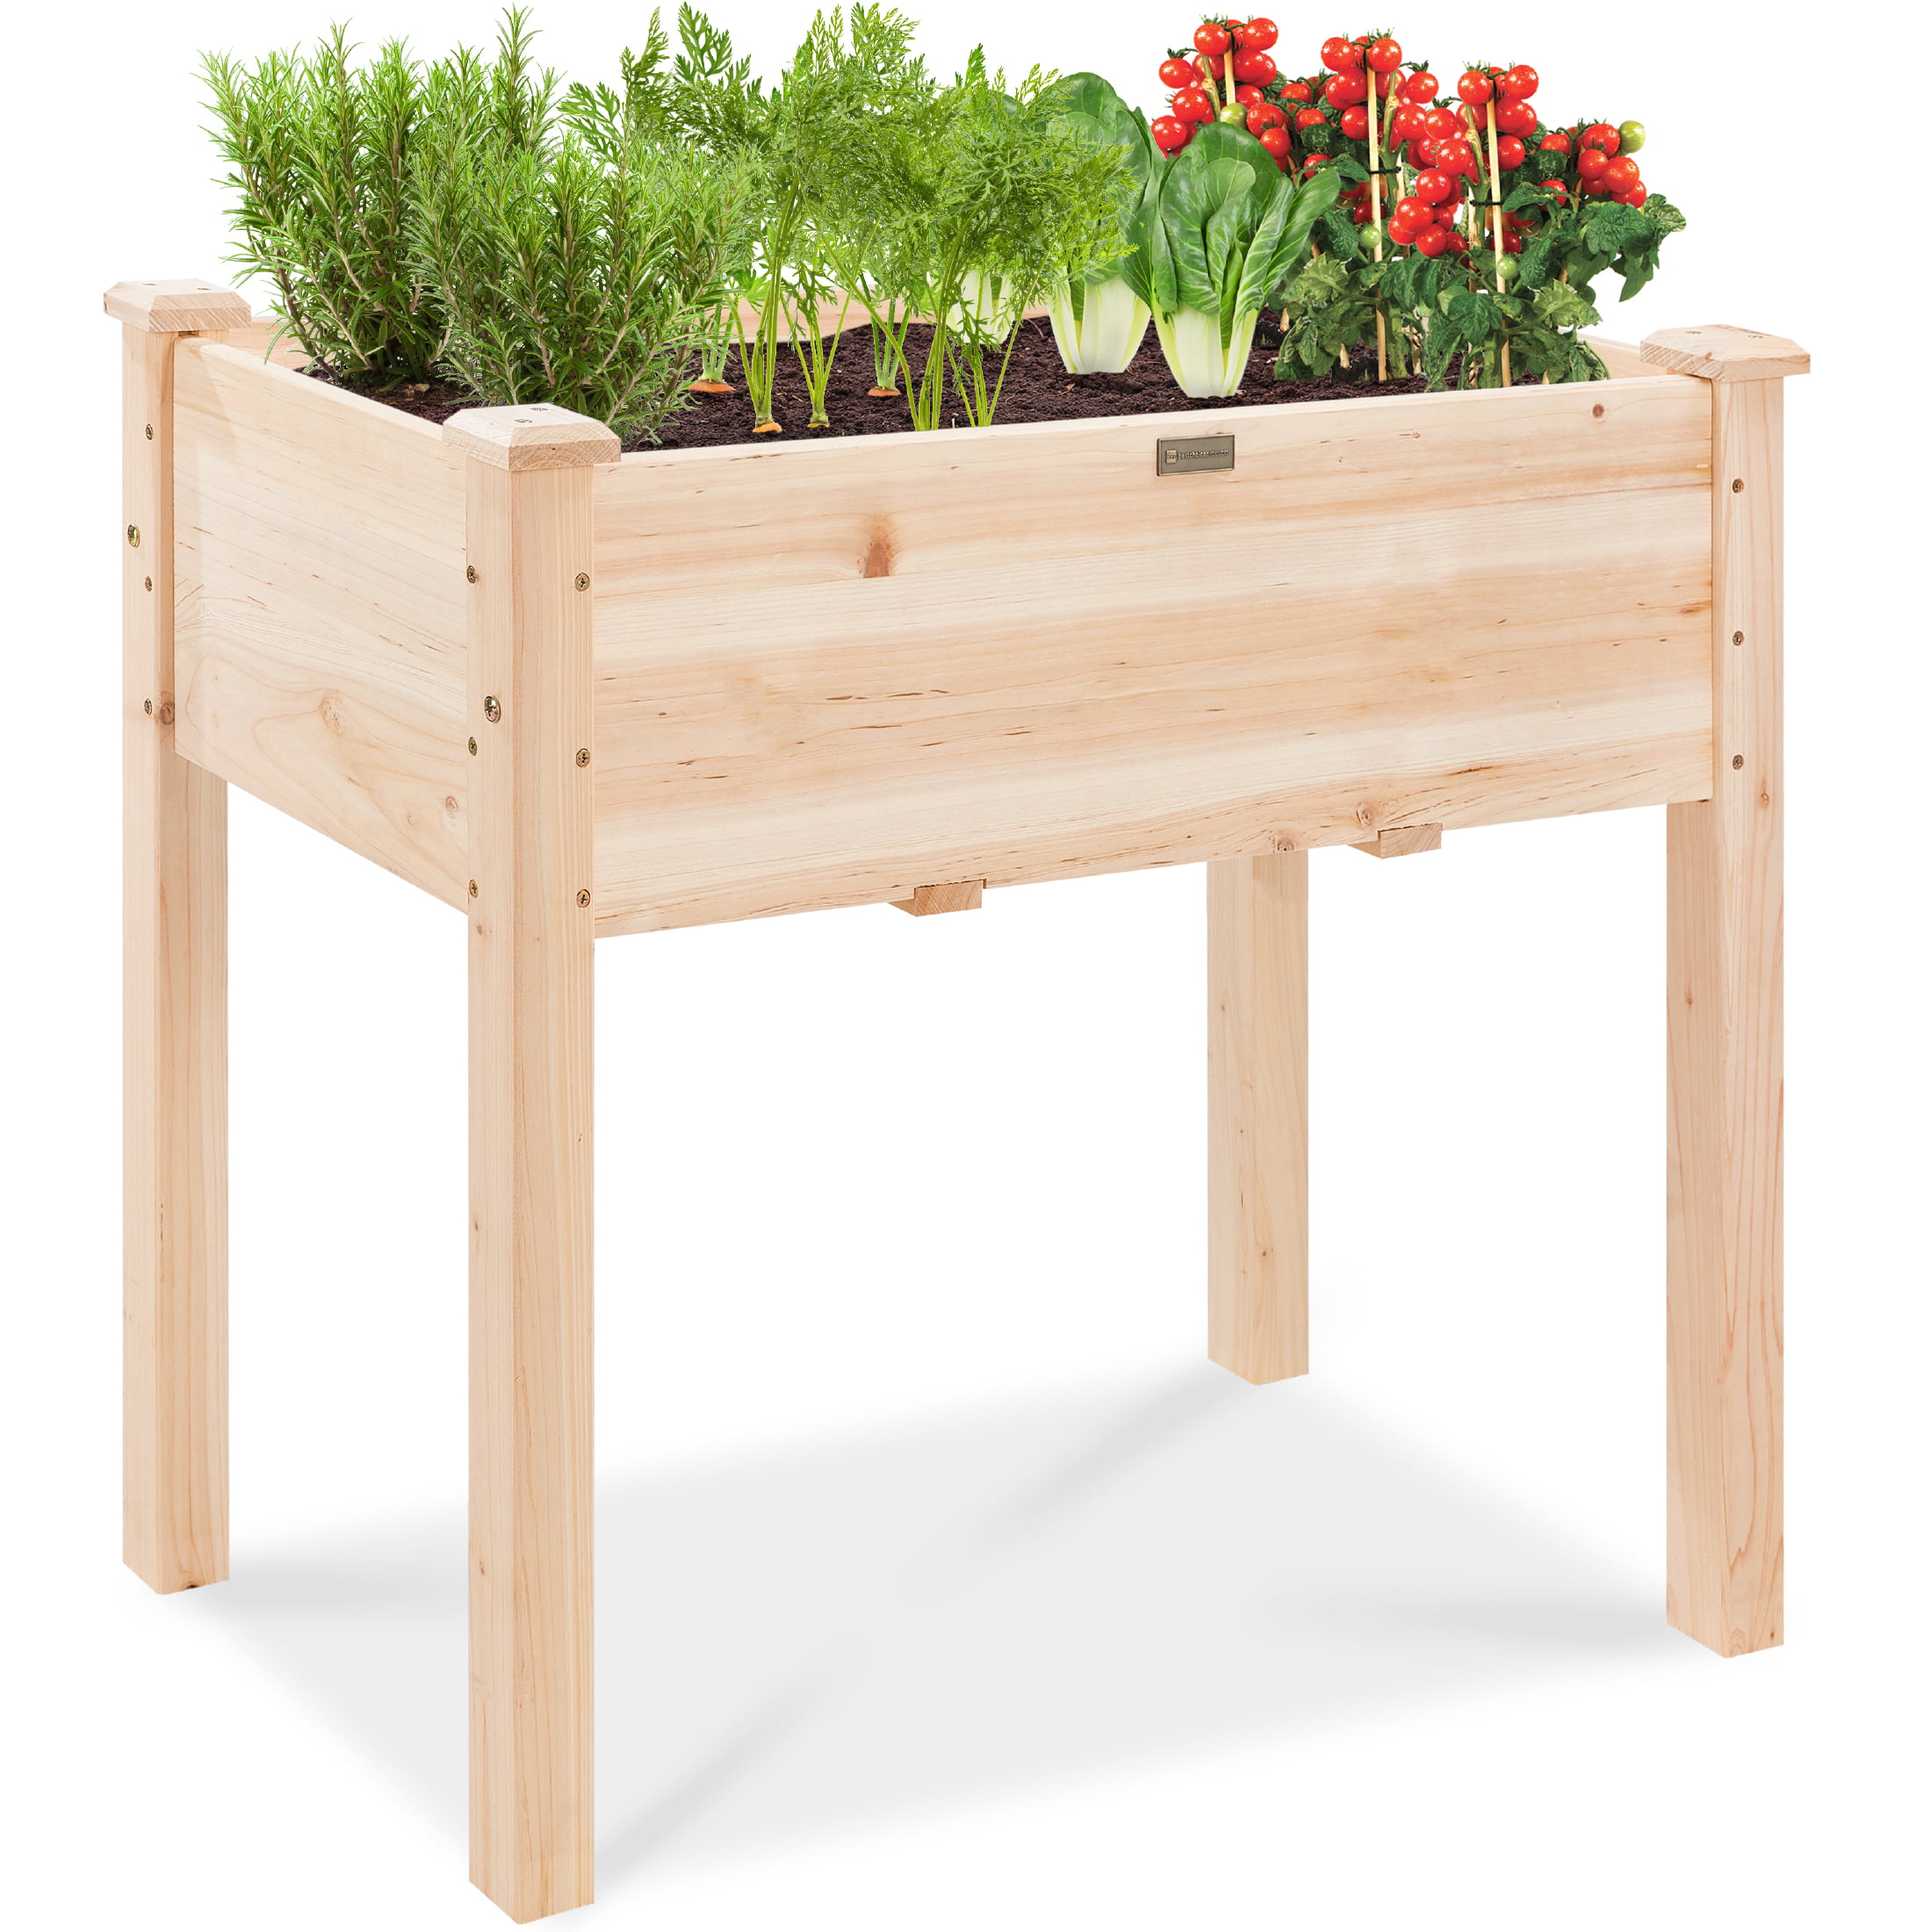 Natural BIGHAVE Garden Beds Planter Box for Vegetable/Flower/Herb Outdoor Backyard